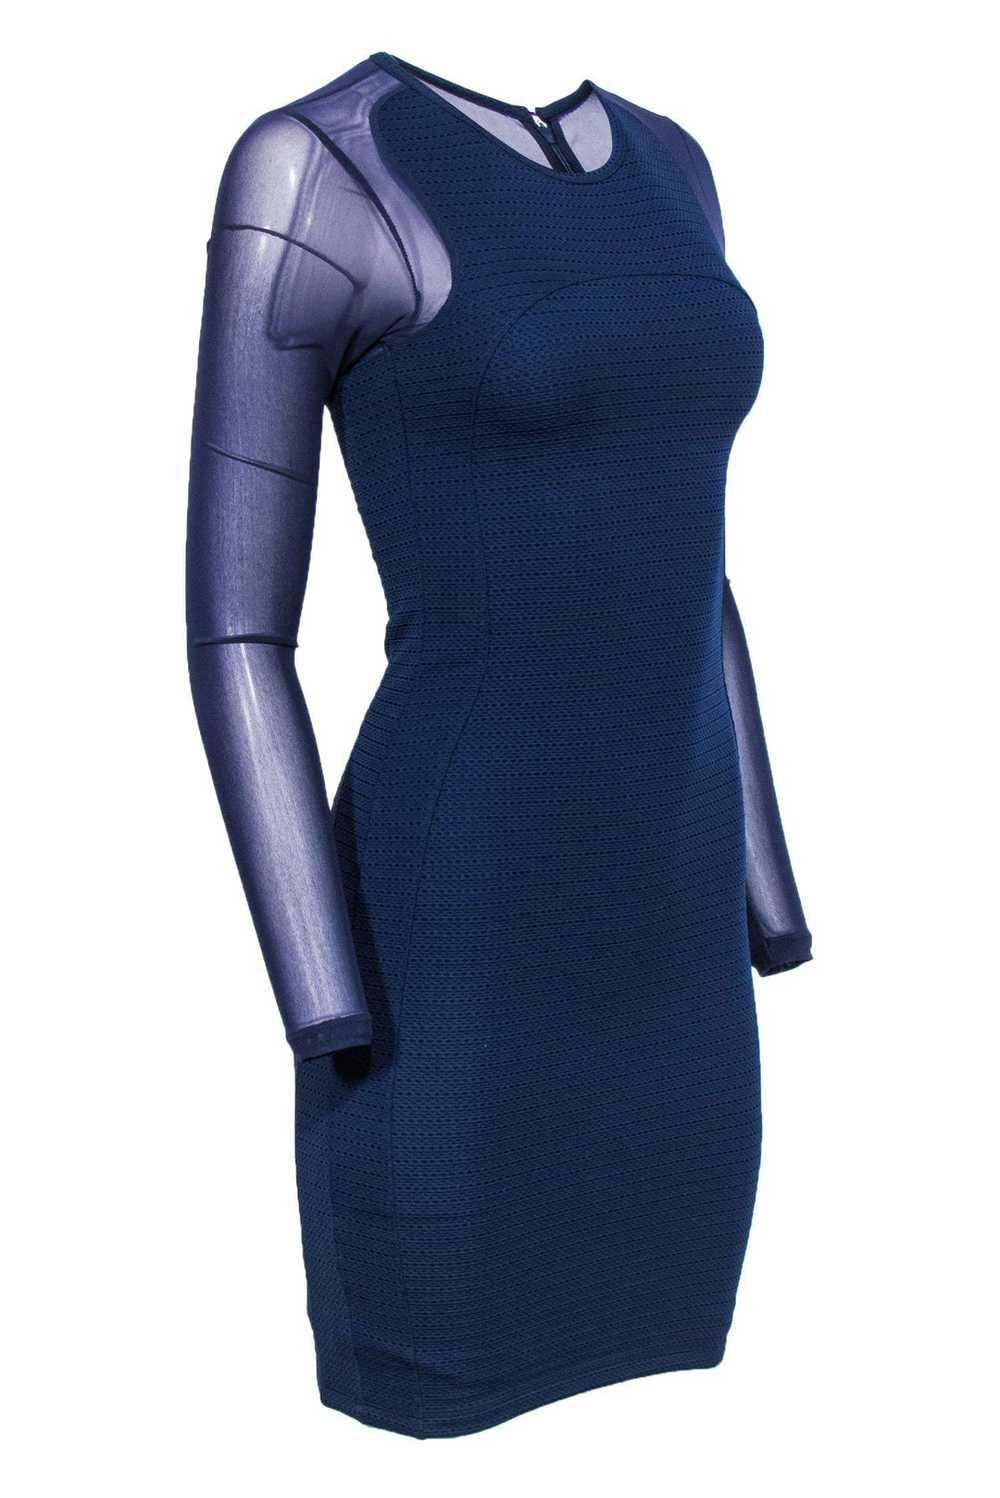 Reiss - Navy Textured Bodycon Dress w/ Mesh Sleev… - image 2